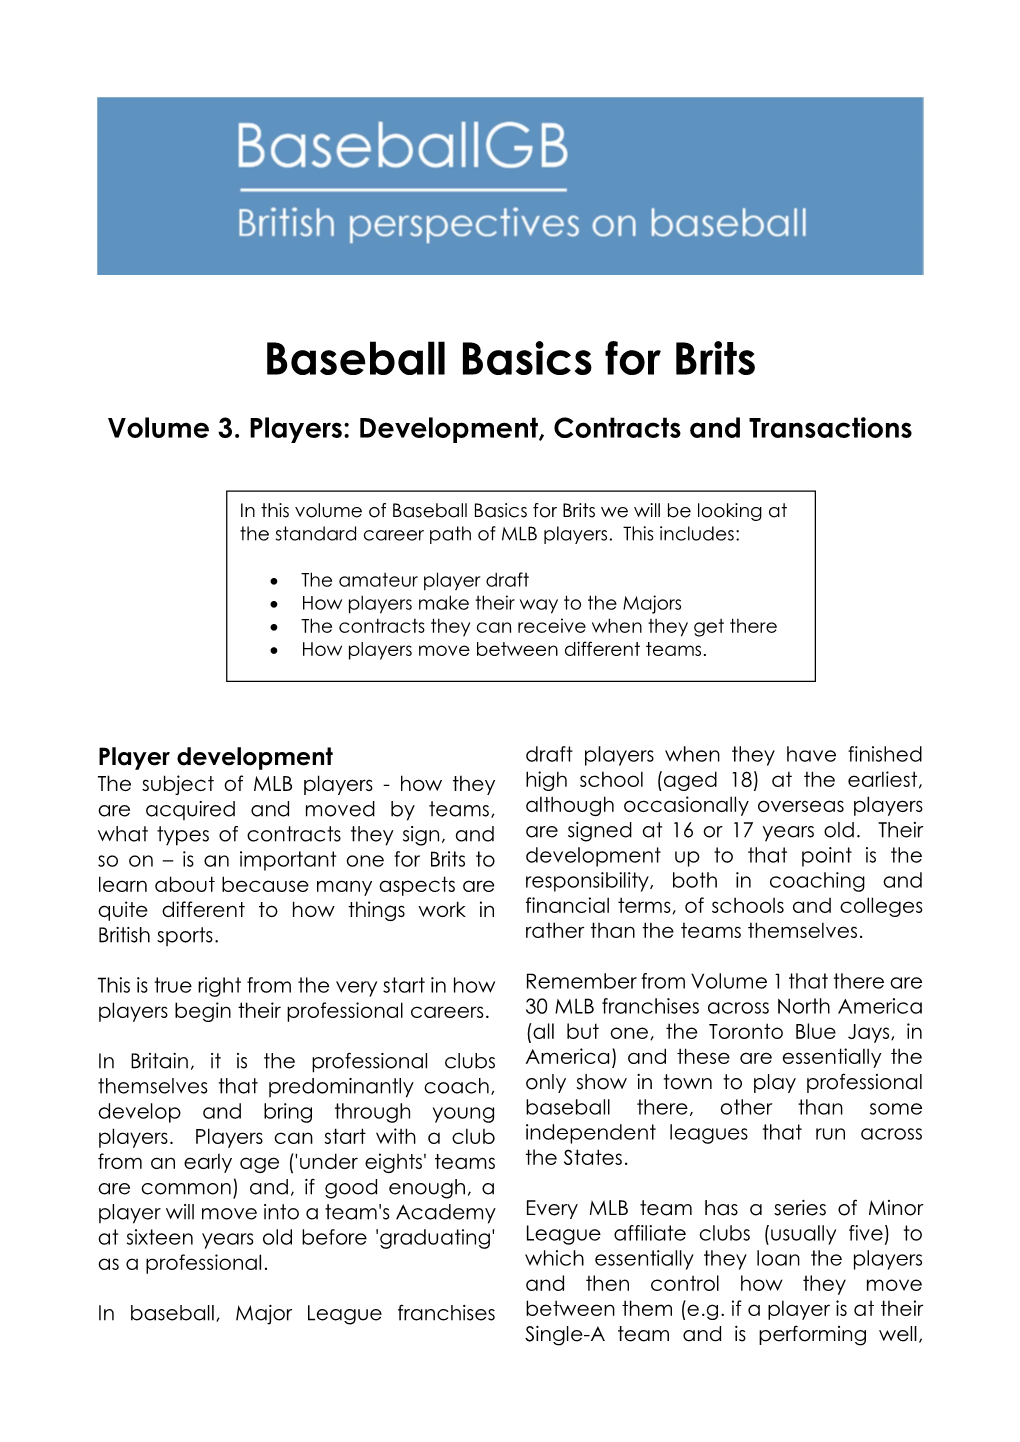 Baseball Basics for Brits